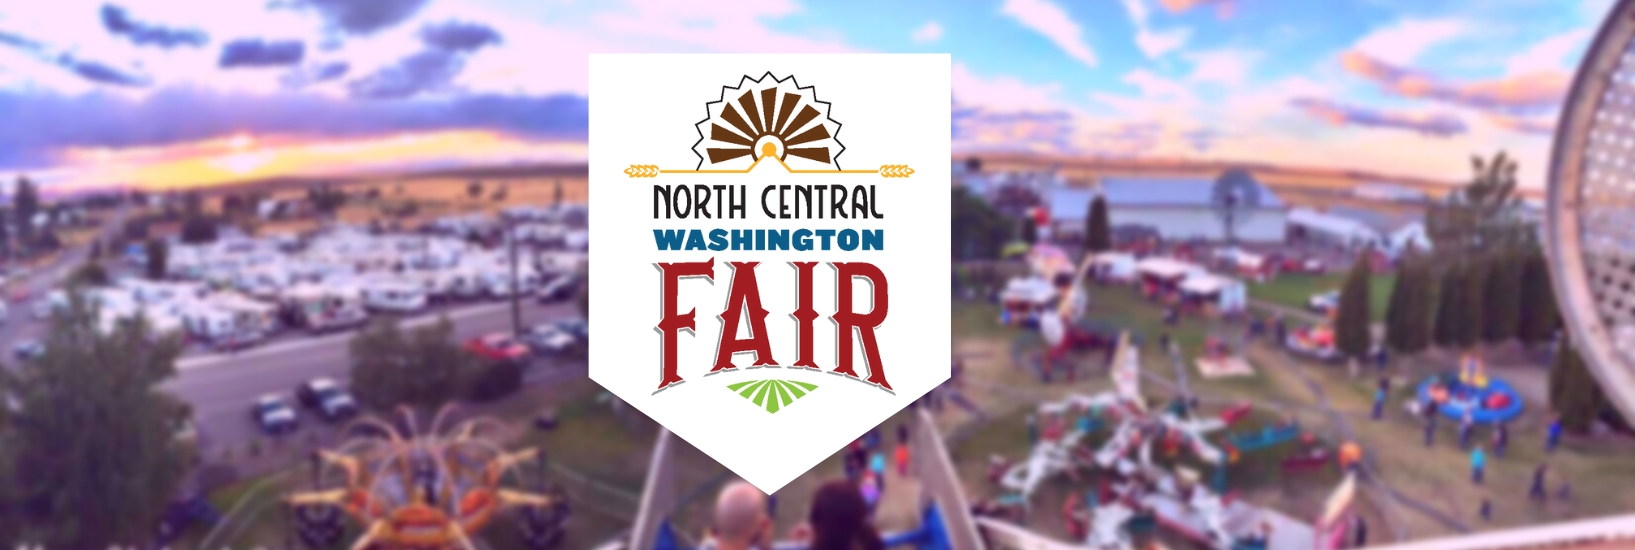 North Central Washington Fair - Eventeny